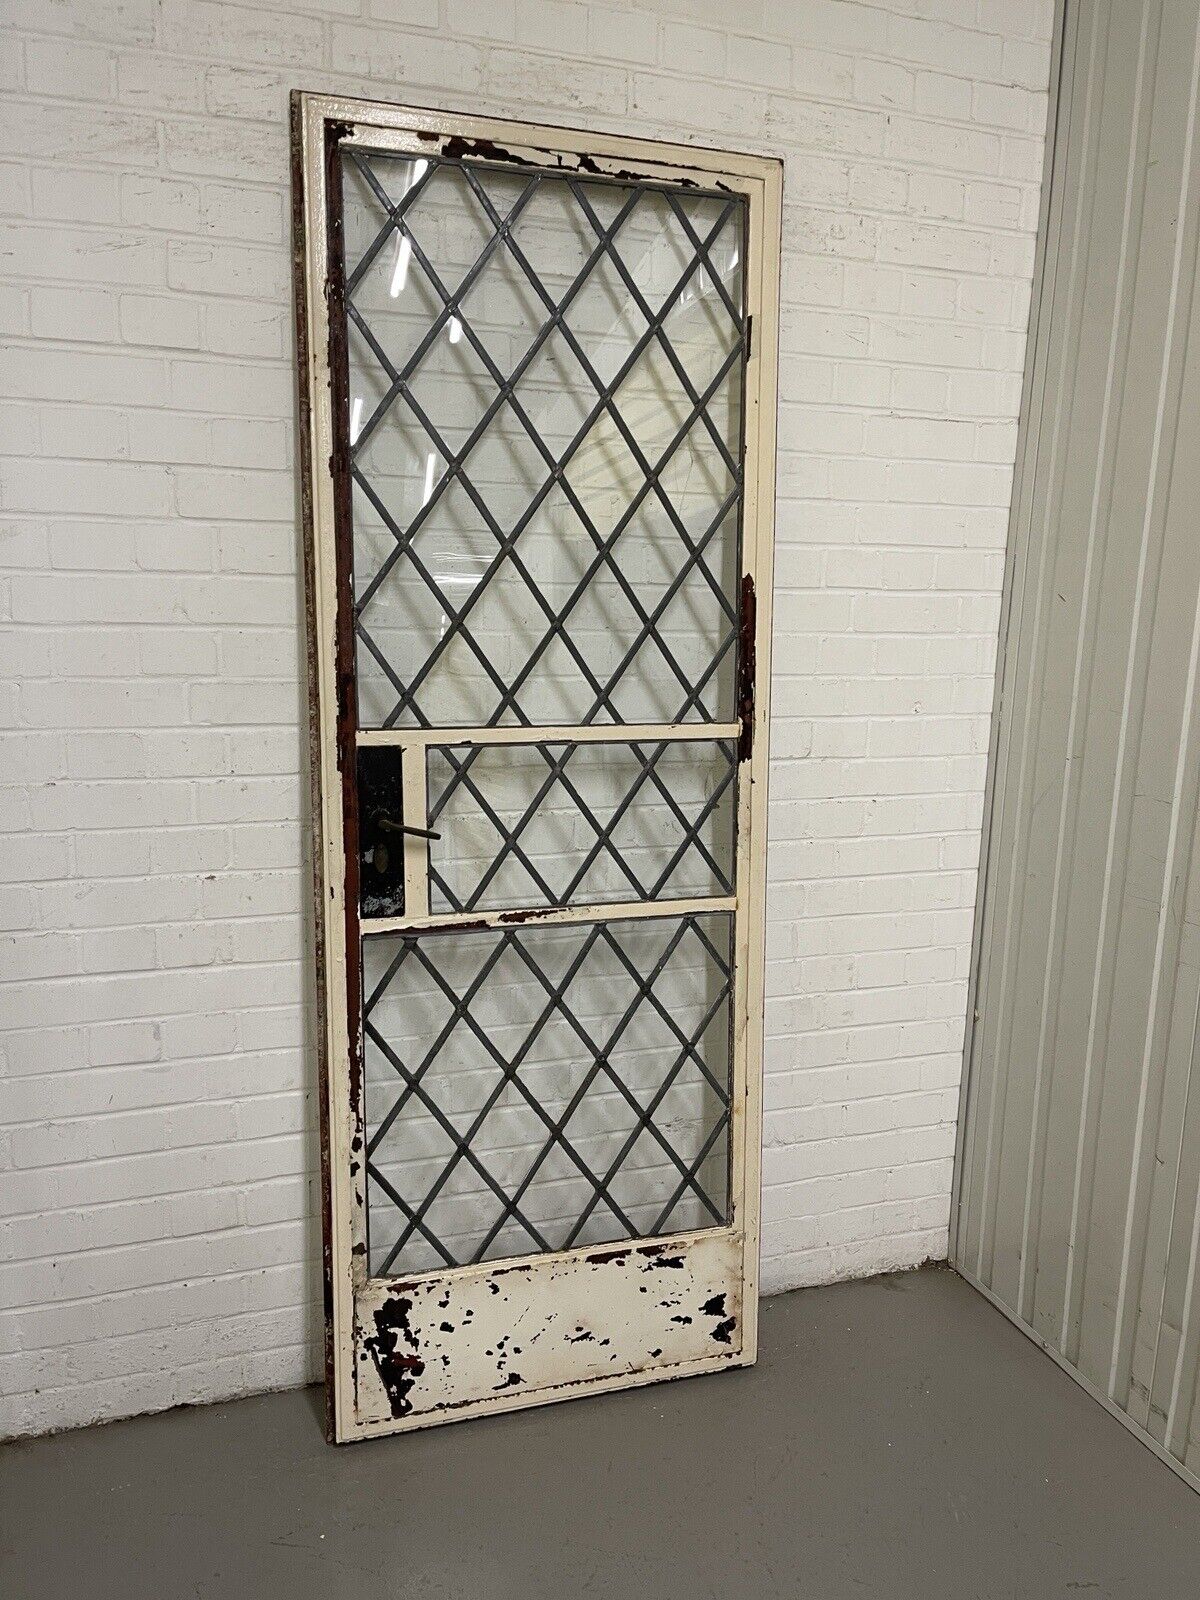 Reclaimed Vintage Industrial Crittall Crital Steel Metal Door Frame 2055 x 763mm